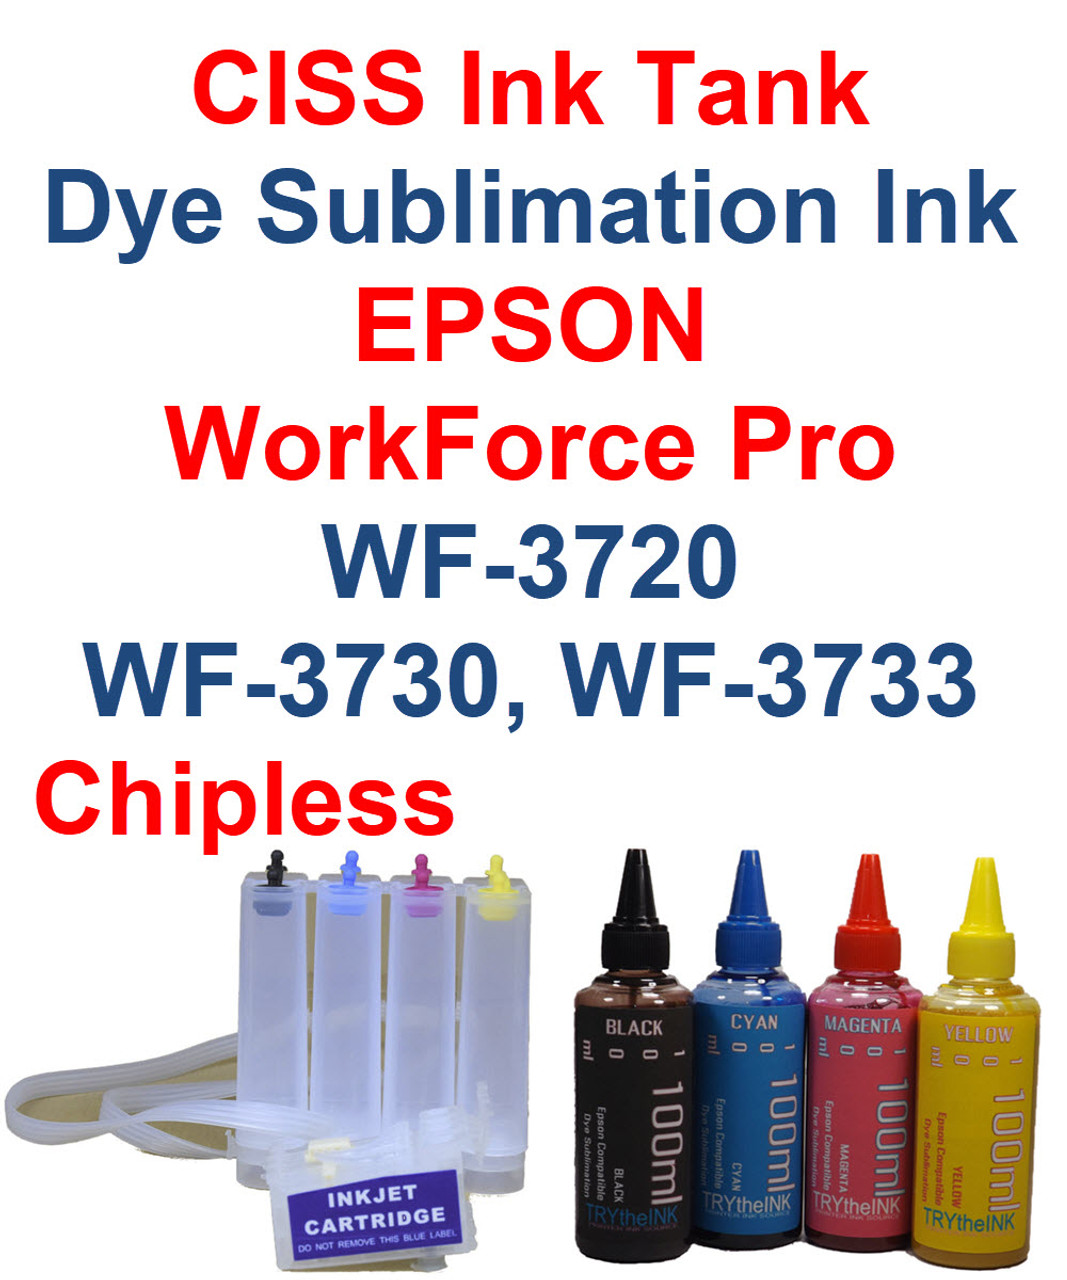 CISS Chipless Ink Tank 4- 100ml bottles Dye Sublimation Ink for Epson WorkForce Pro WF-3720 WF-3730 WF-3733 Printers